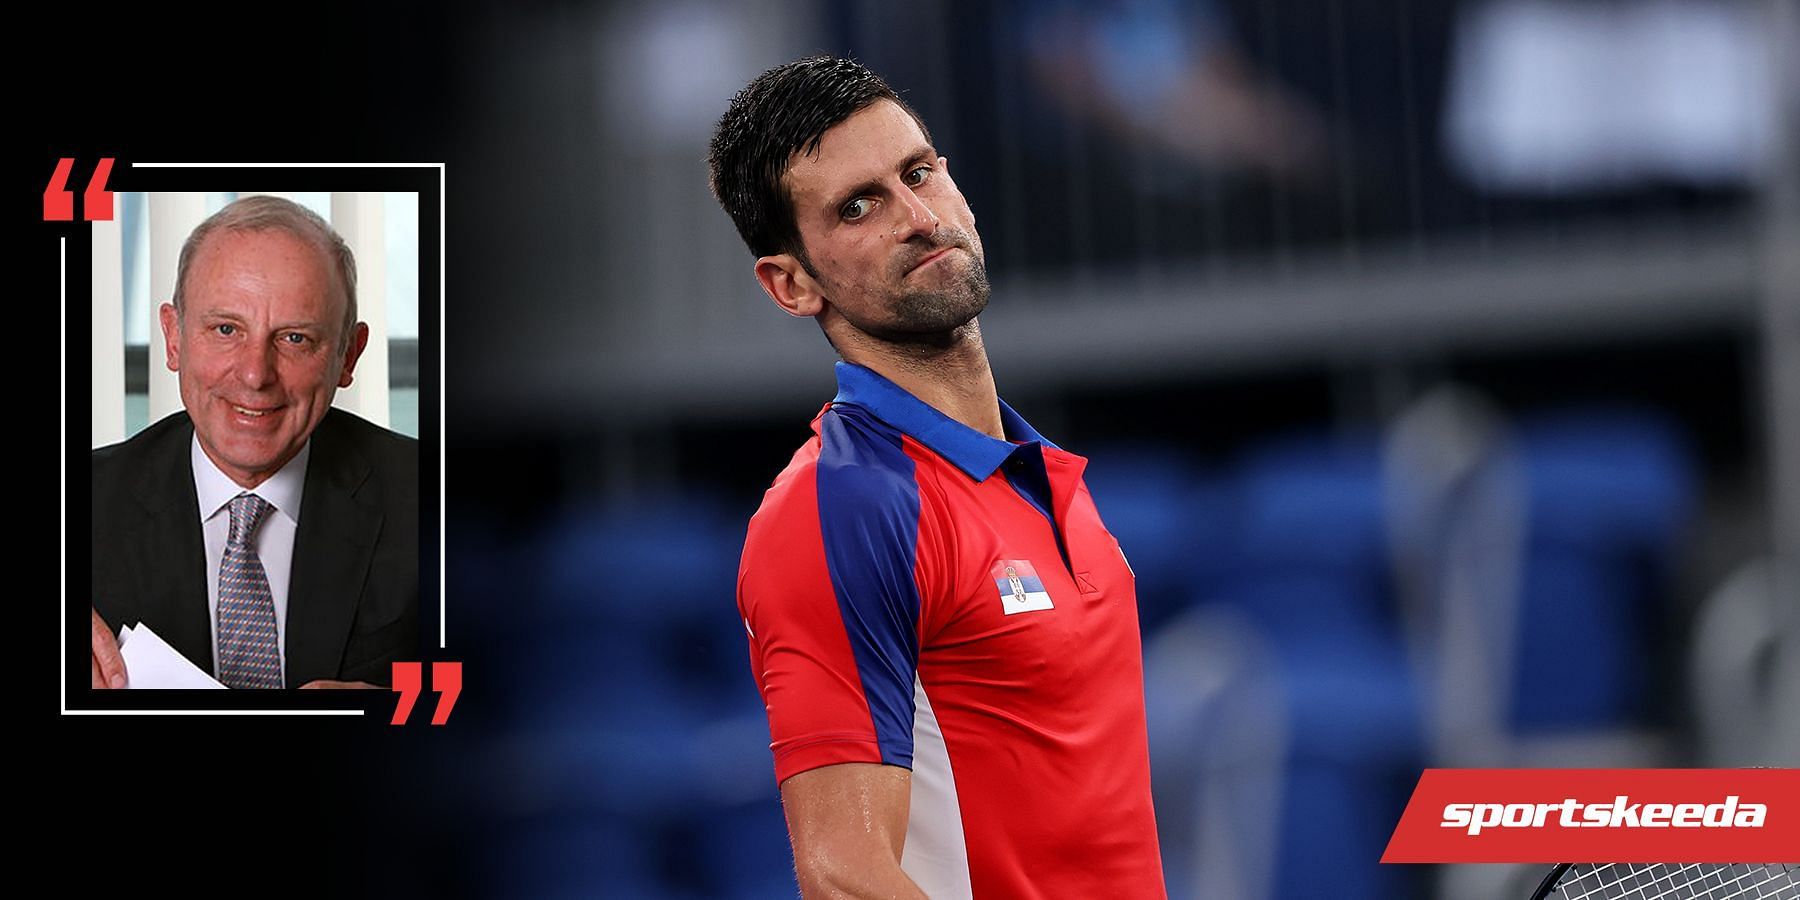 Karol Sikora hopes that Novak Djokovic is allowed to play in the US